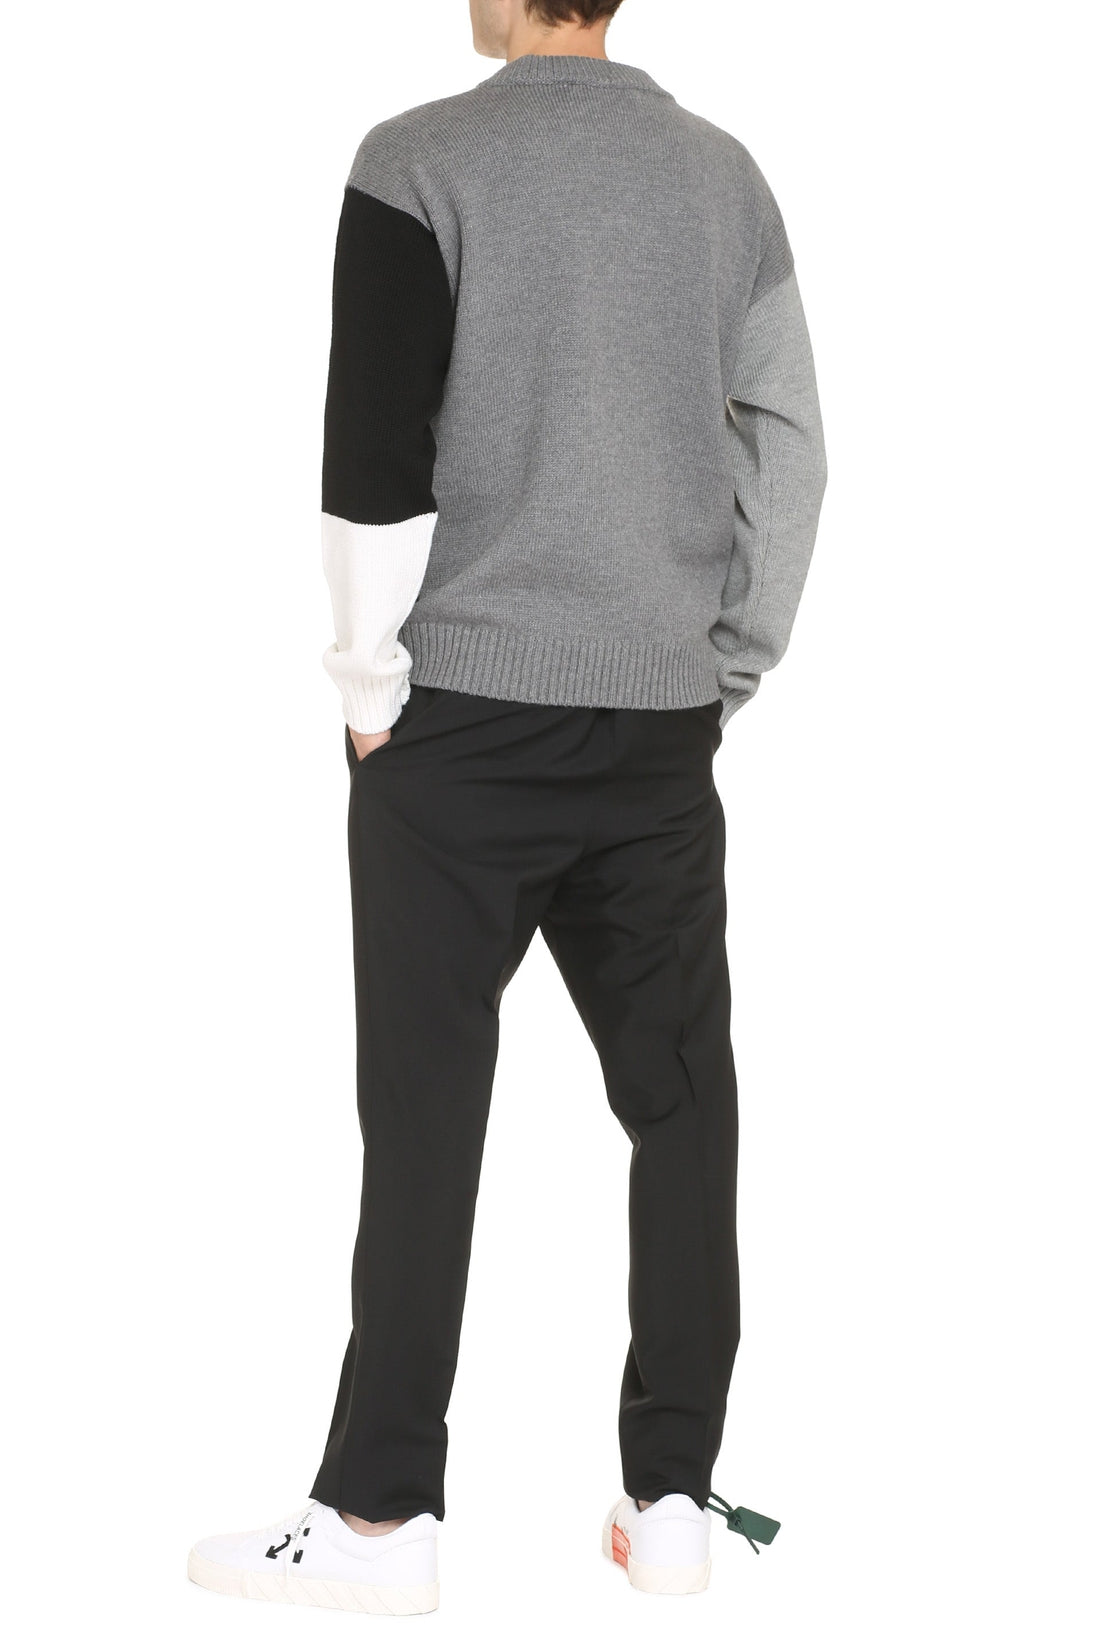 Versace-OUTLET-SALE-Crew-neck wool sweater-ARCHIVIST